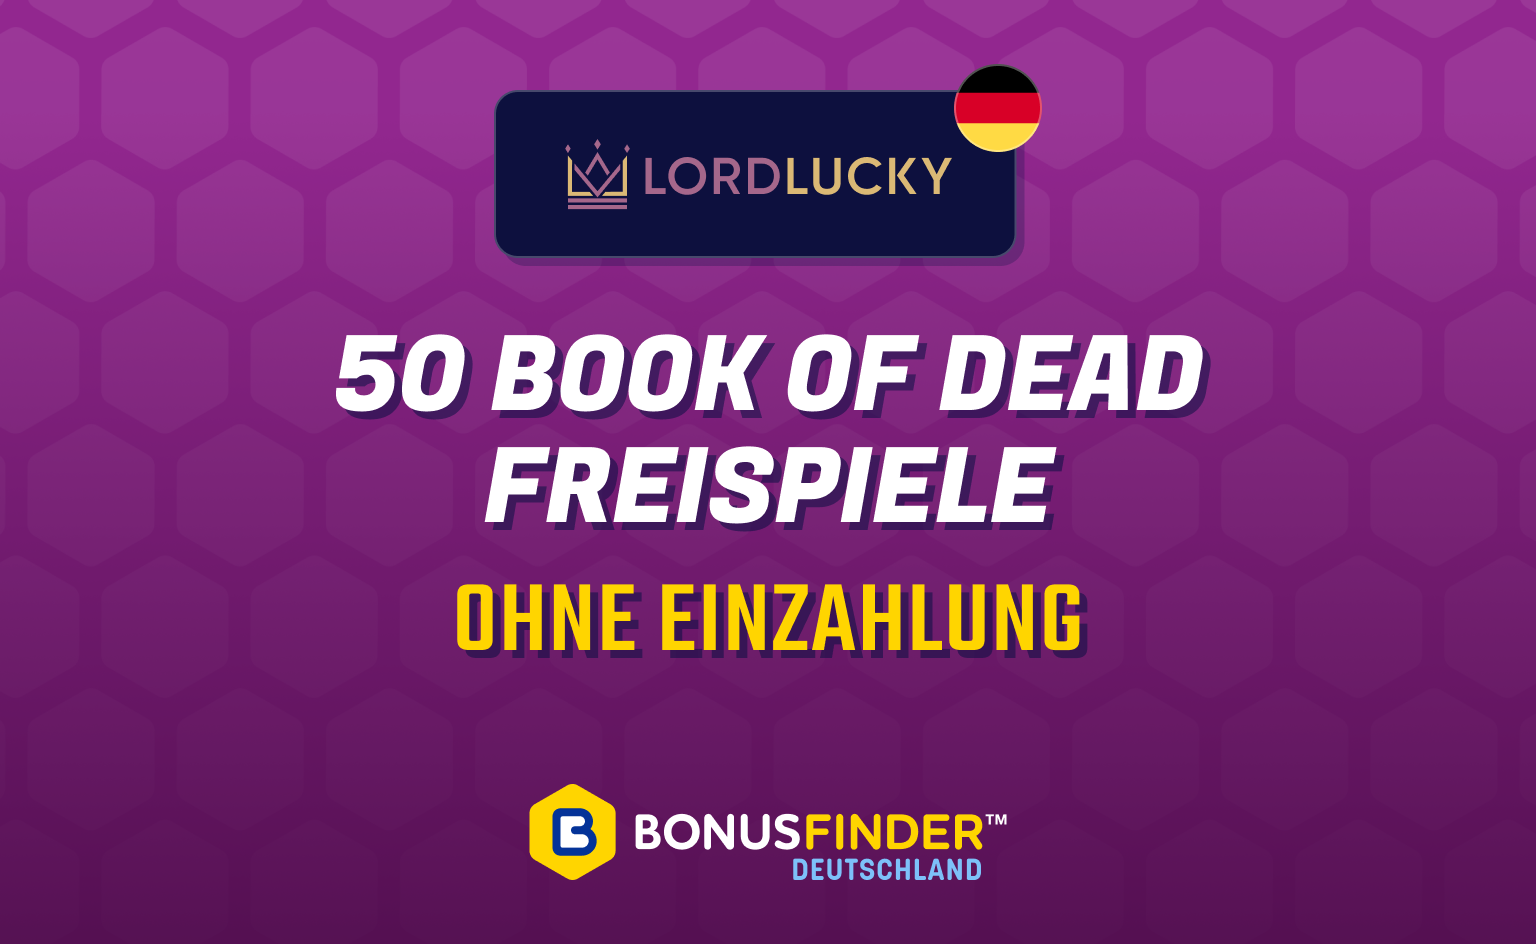 50 book of dead freispiele lord lucky